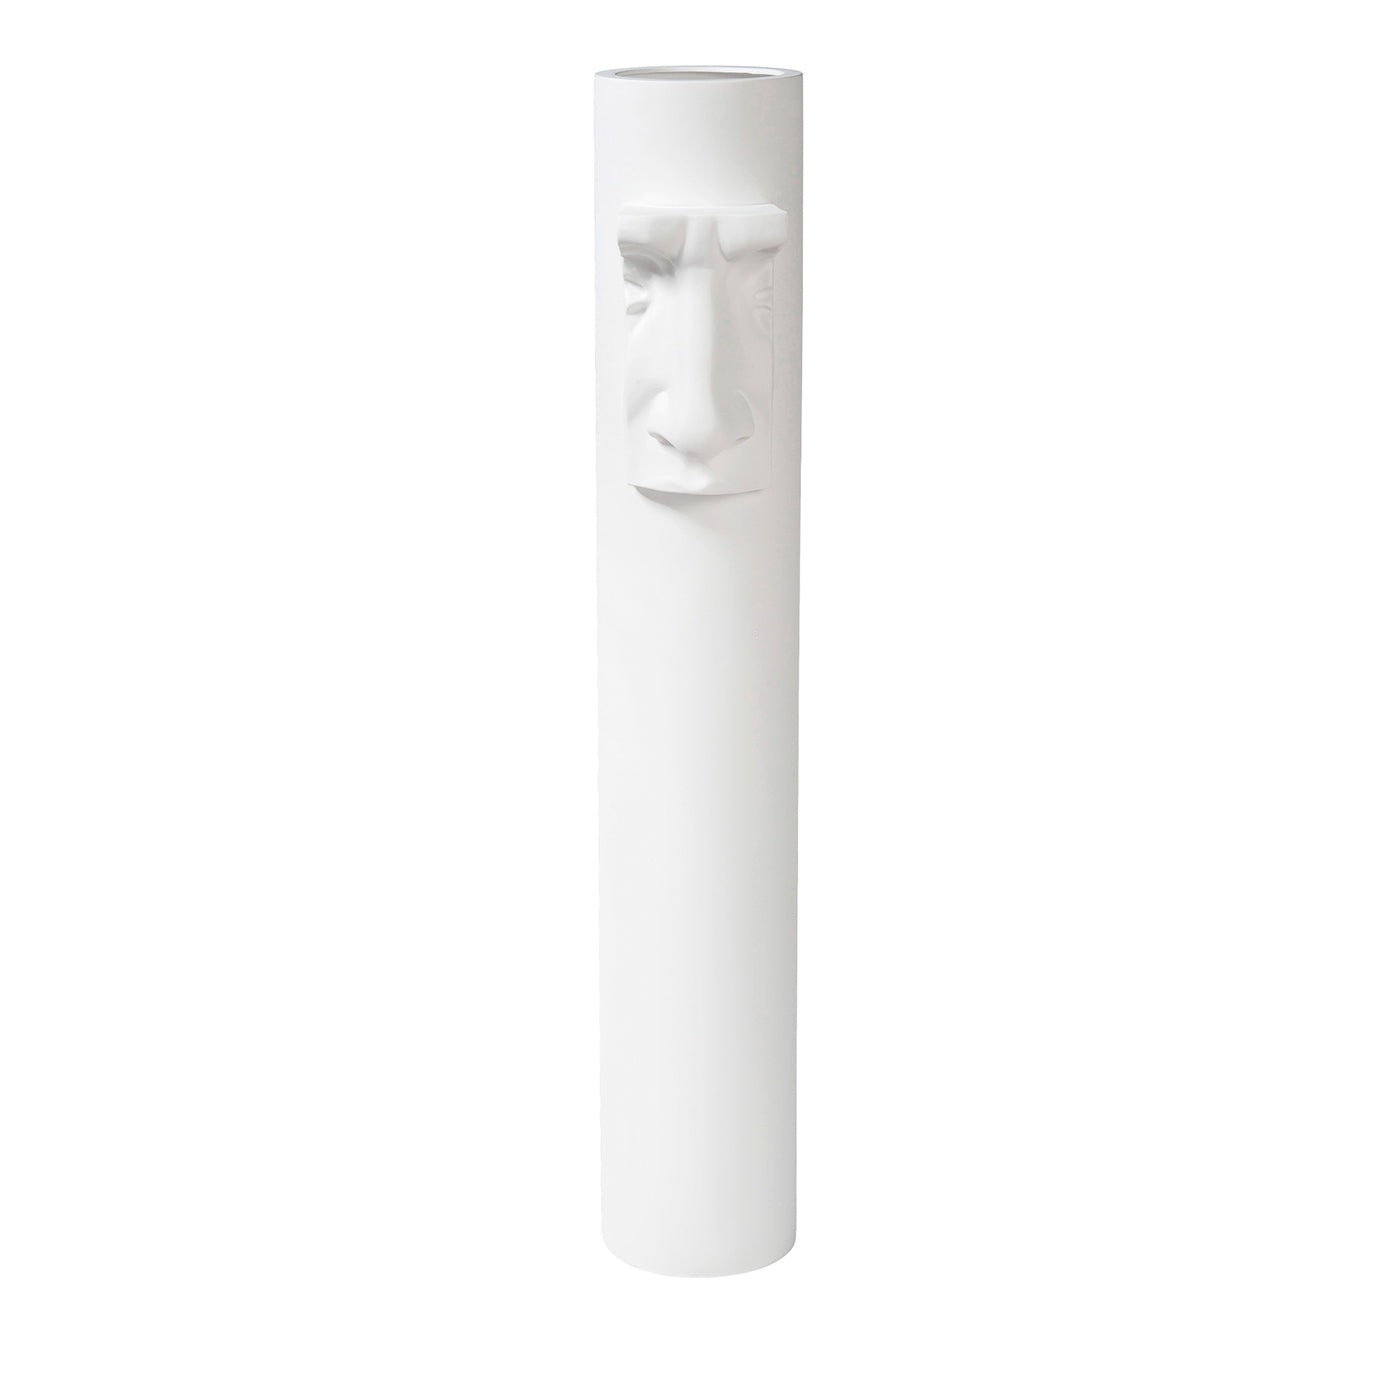 David's Nose White Vase - Main view